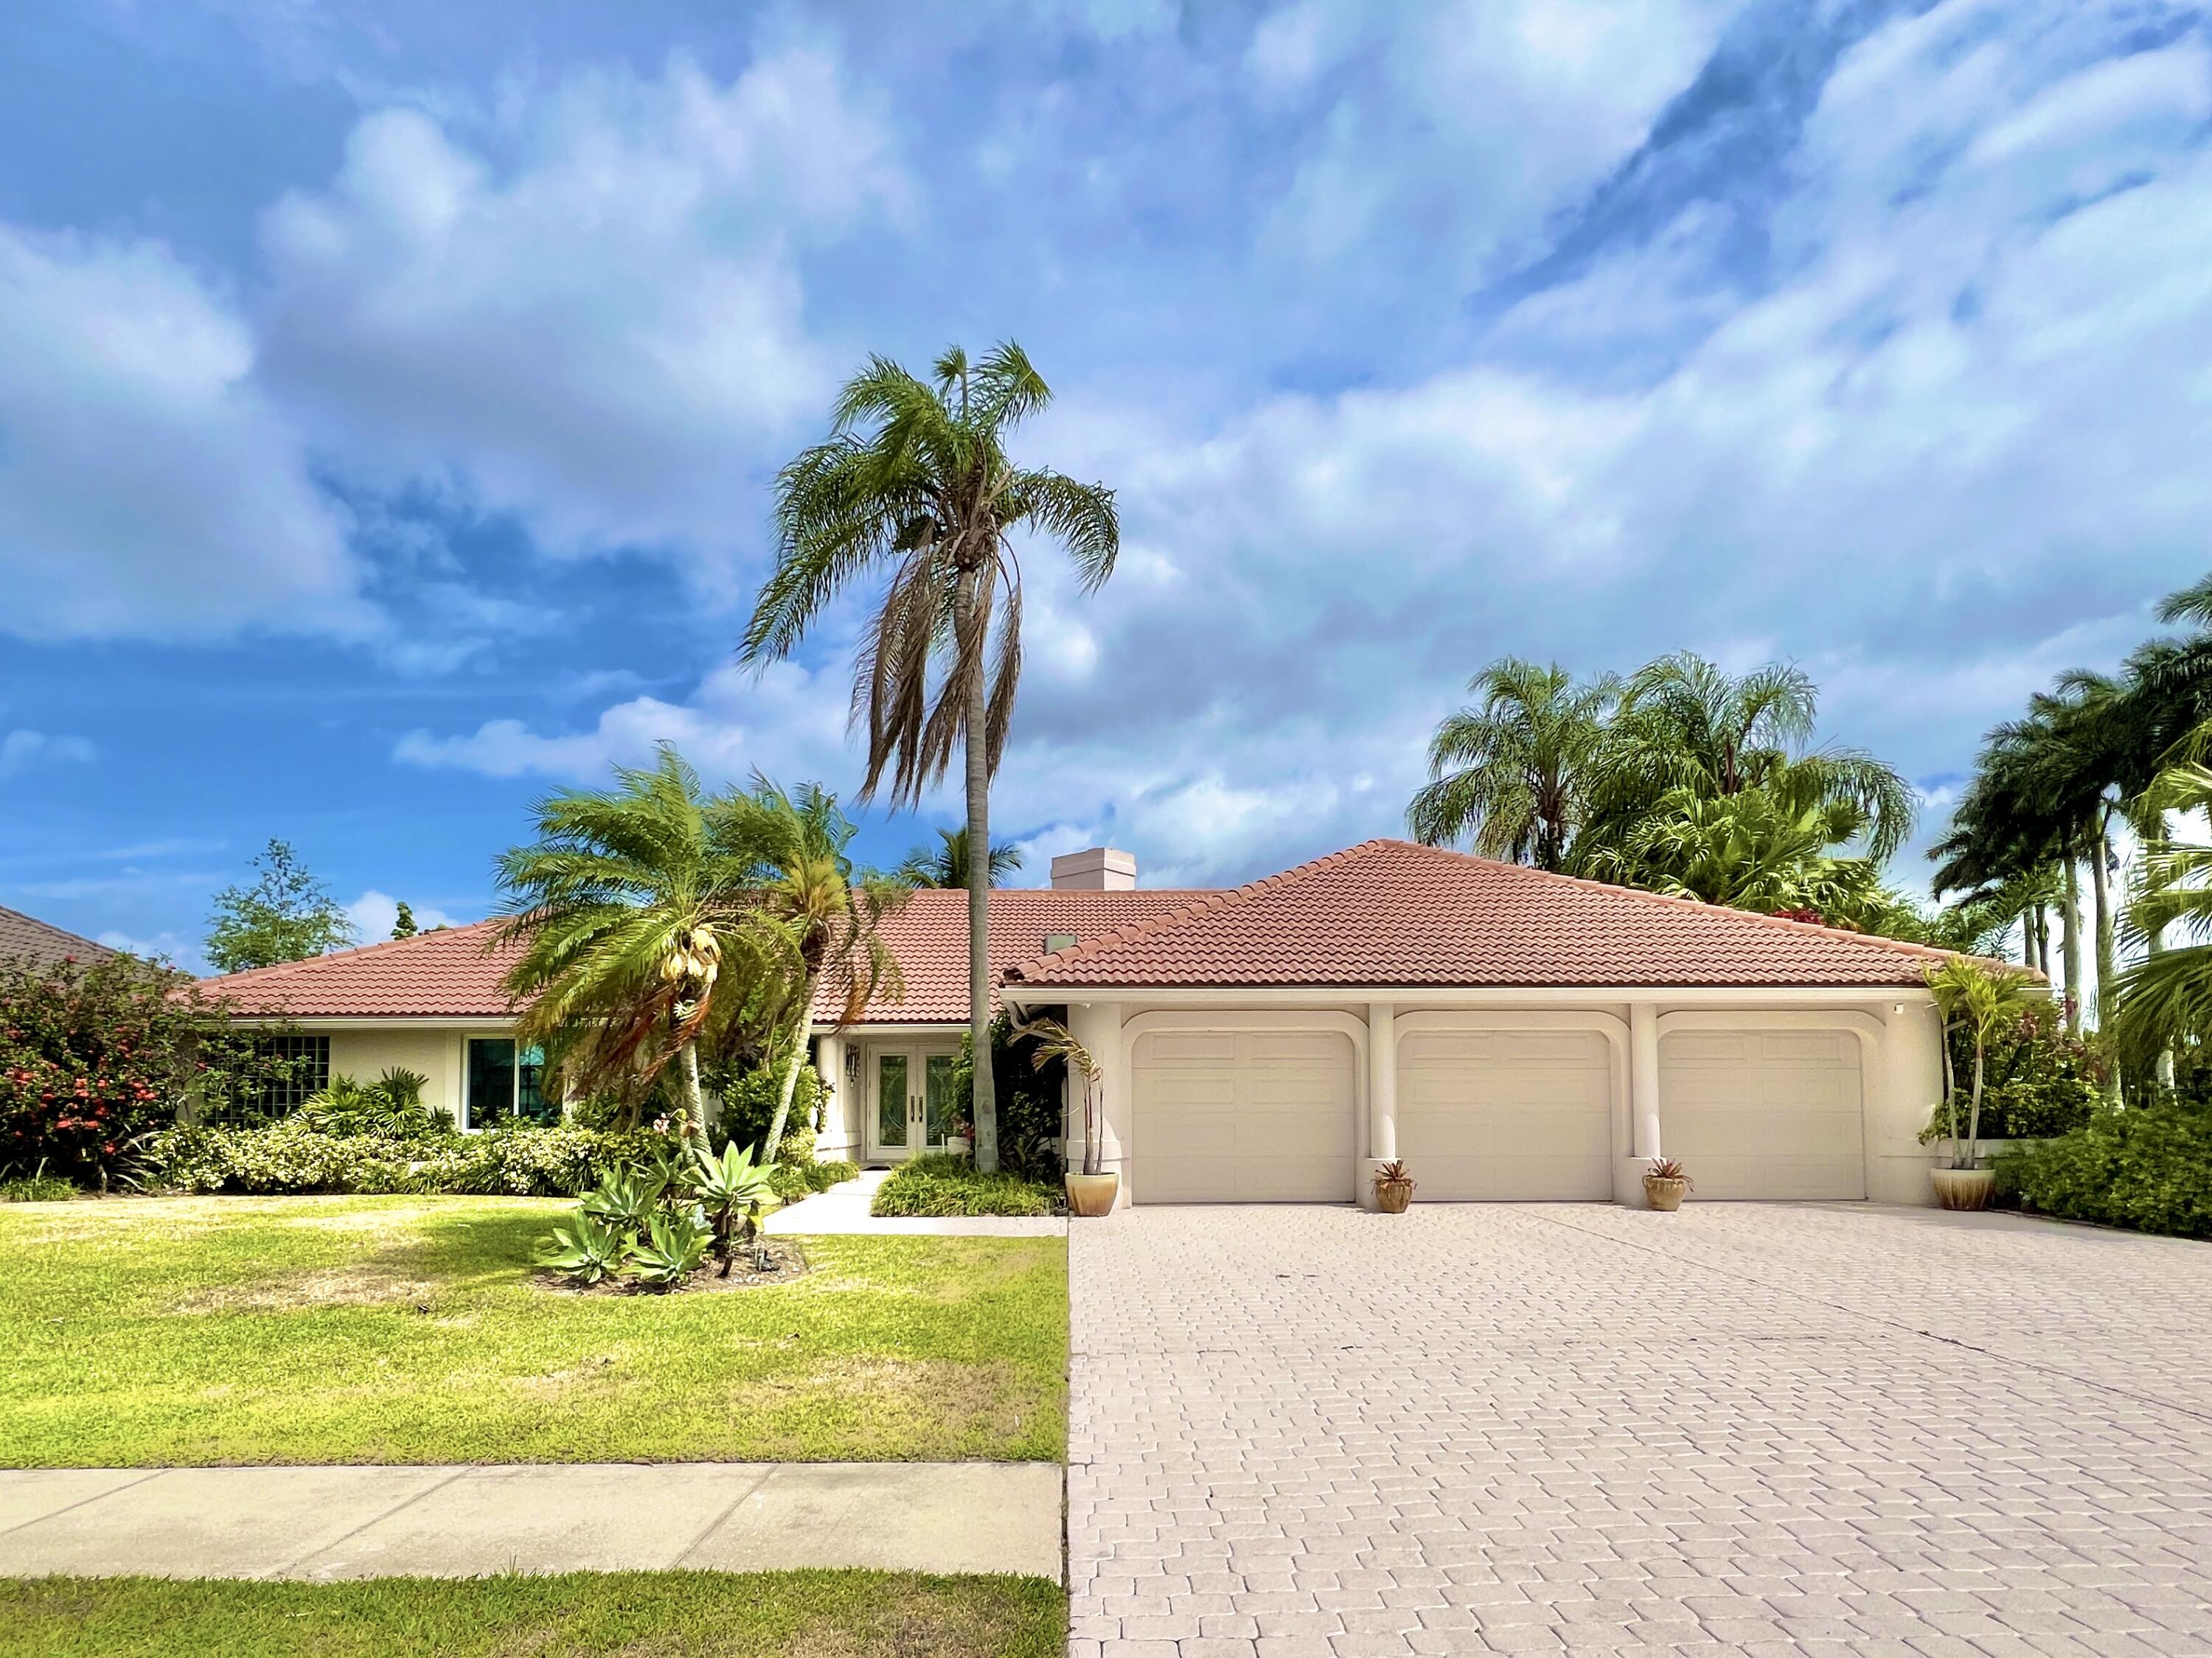 Property for Sale at 6806 Newport Lake Circle, Boca Raton, Palm Beach County, Florida - Bedrooms: 4 
Bathrooms: 3  - $1,425,000